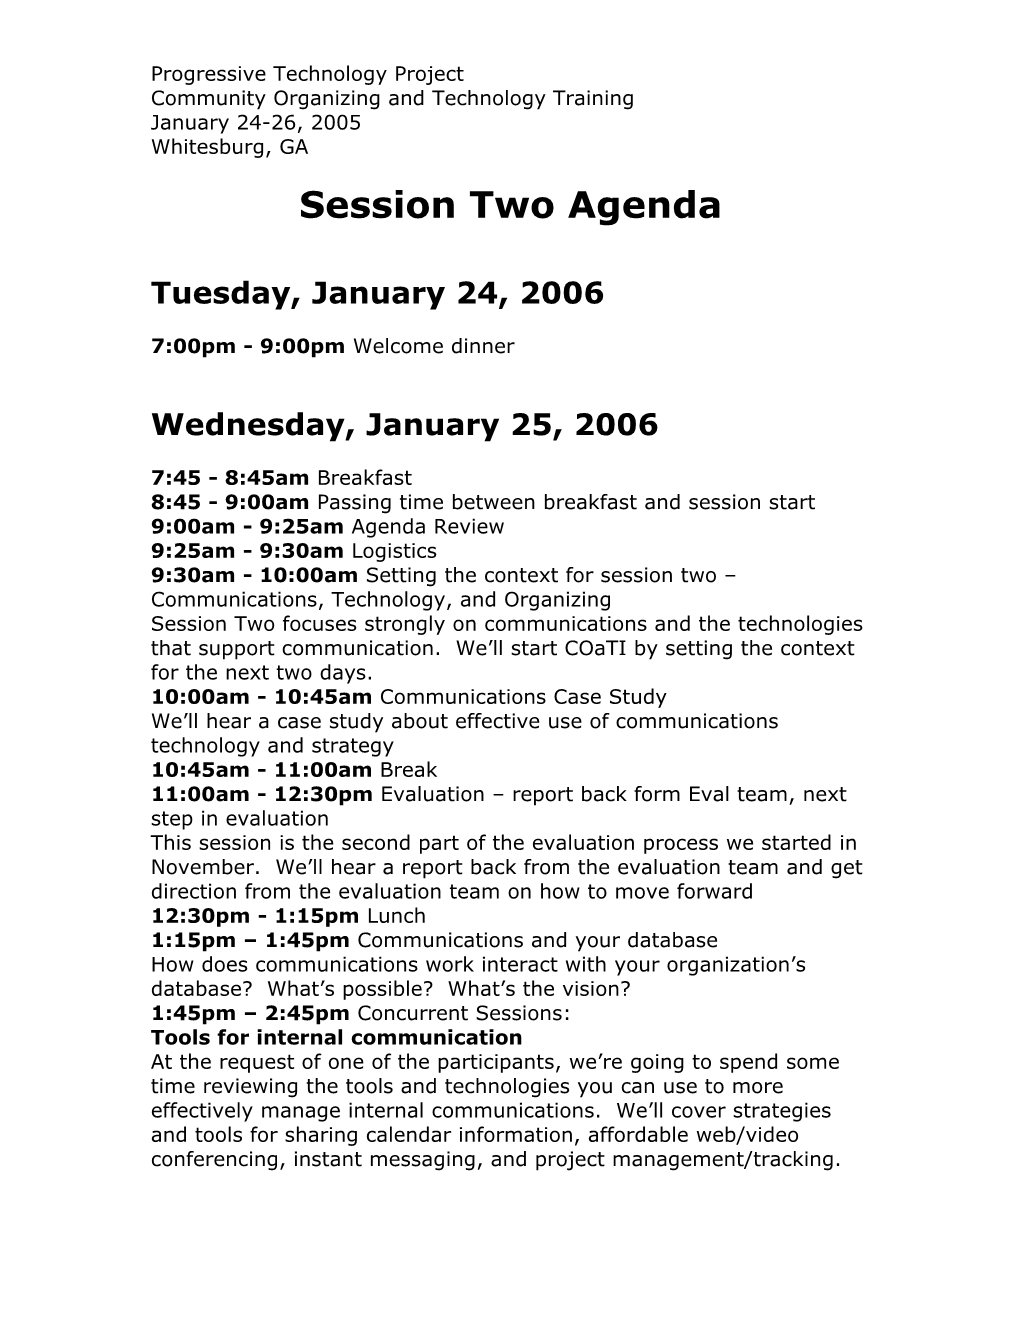 Session Two Agenda